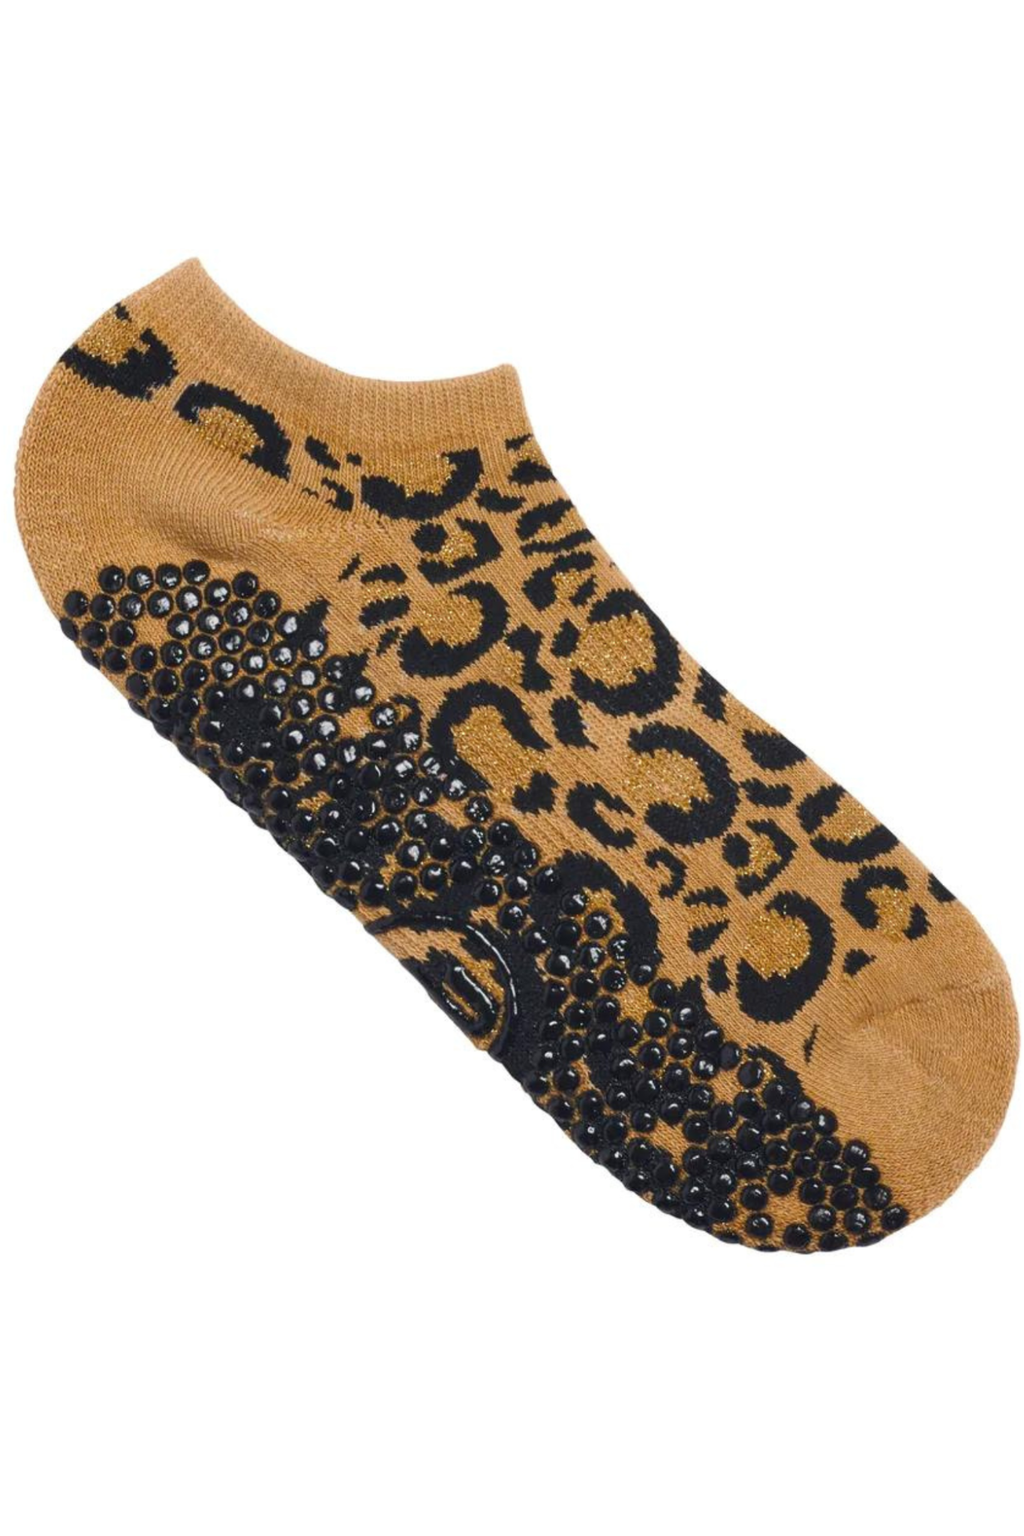 Classic Low Rise Grip Socks - Gold Sparkle Cheetah